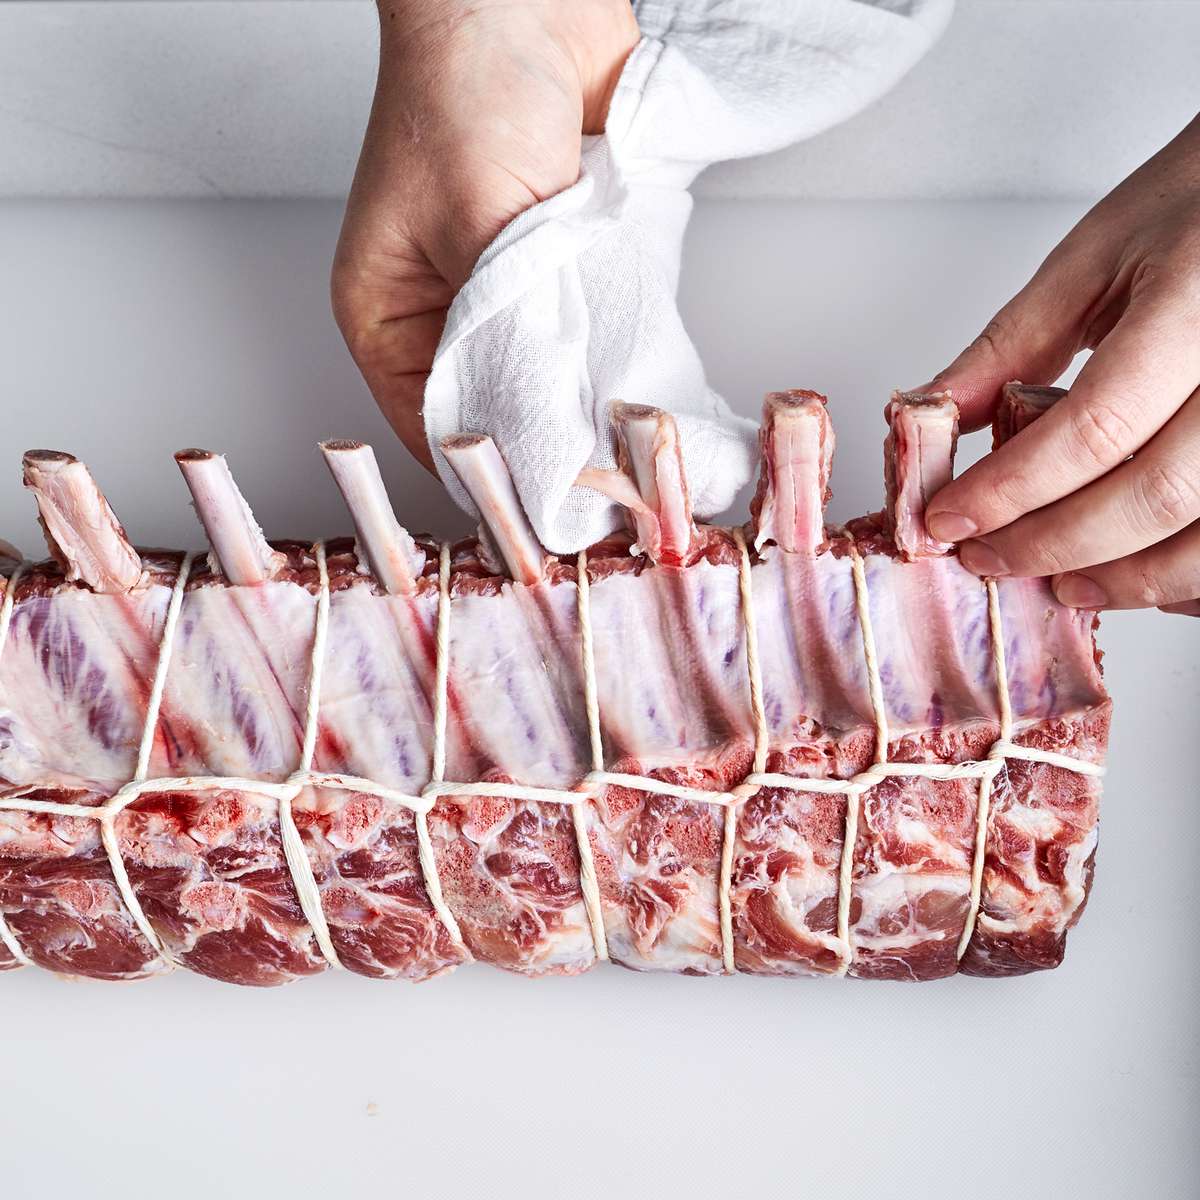 How To Bone-In Roast Pork Loin